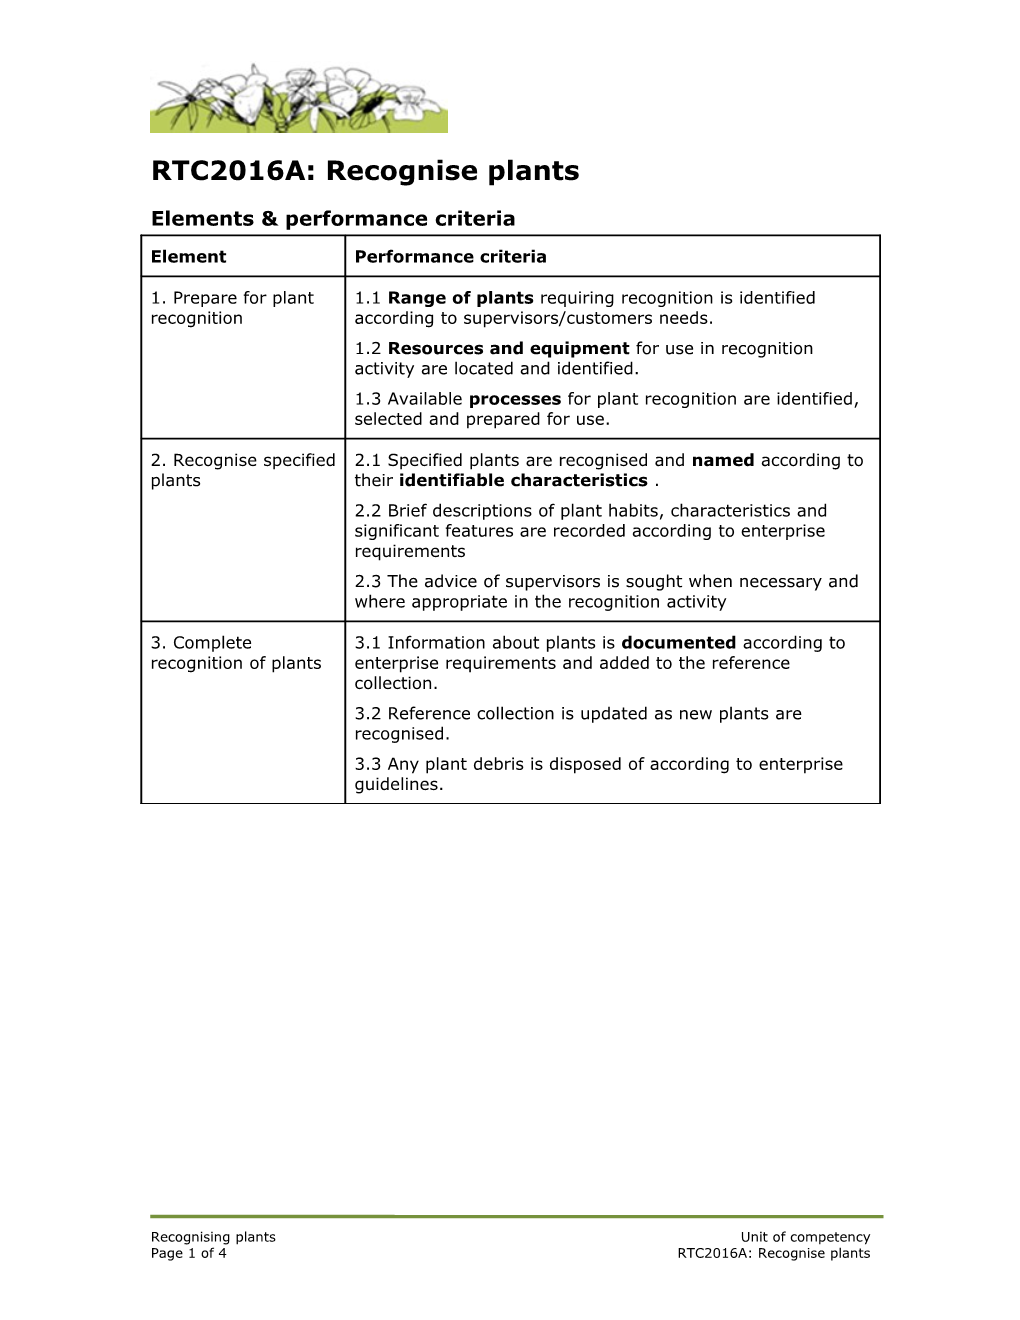 RTC2016A: Recognise Plants